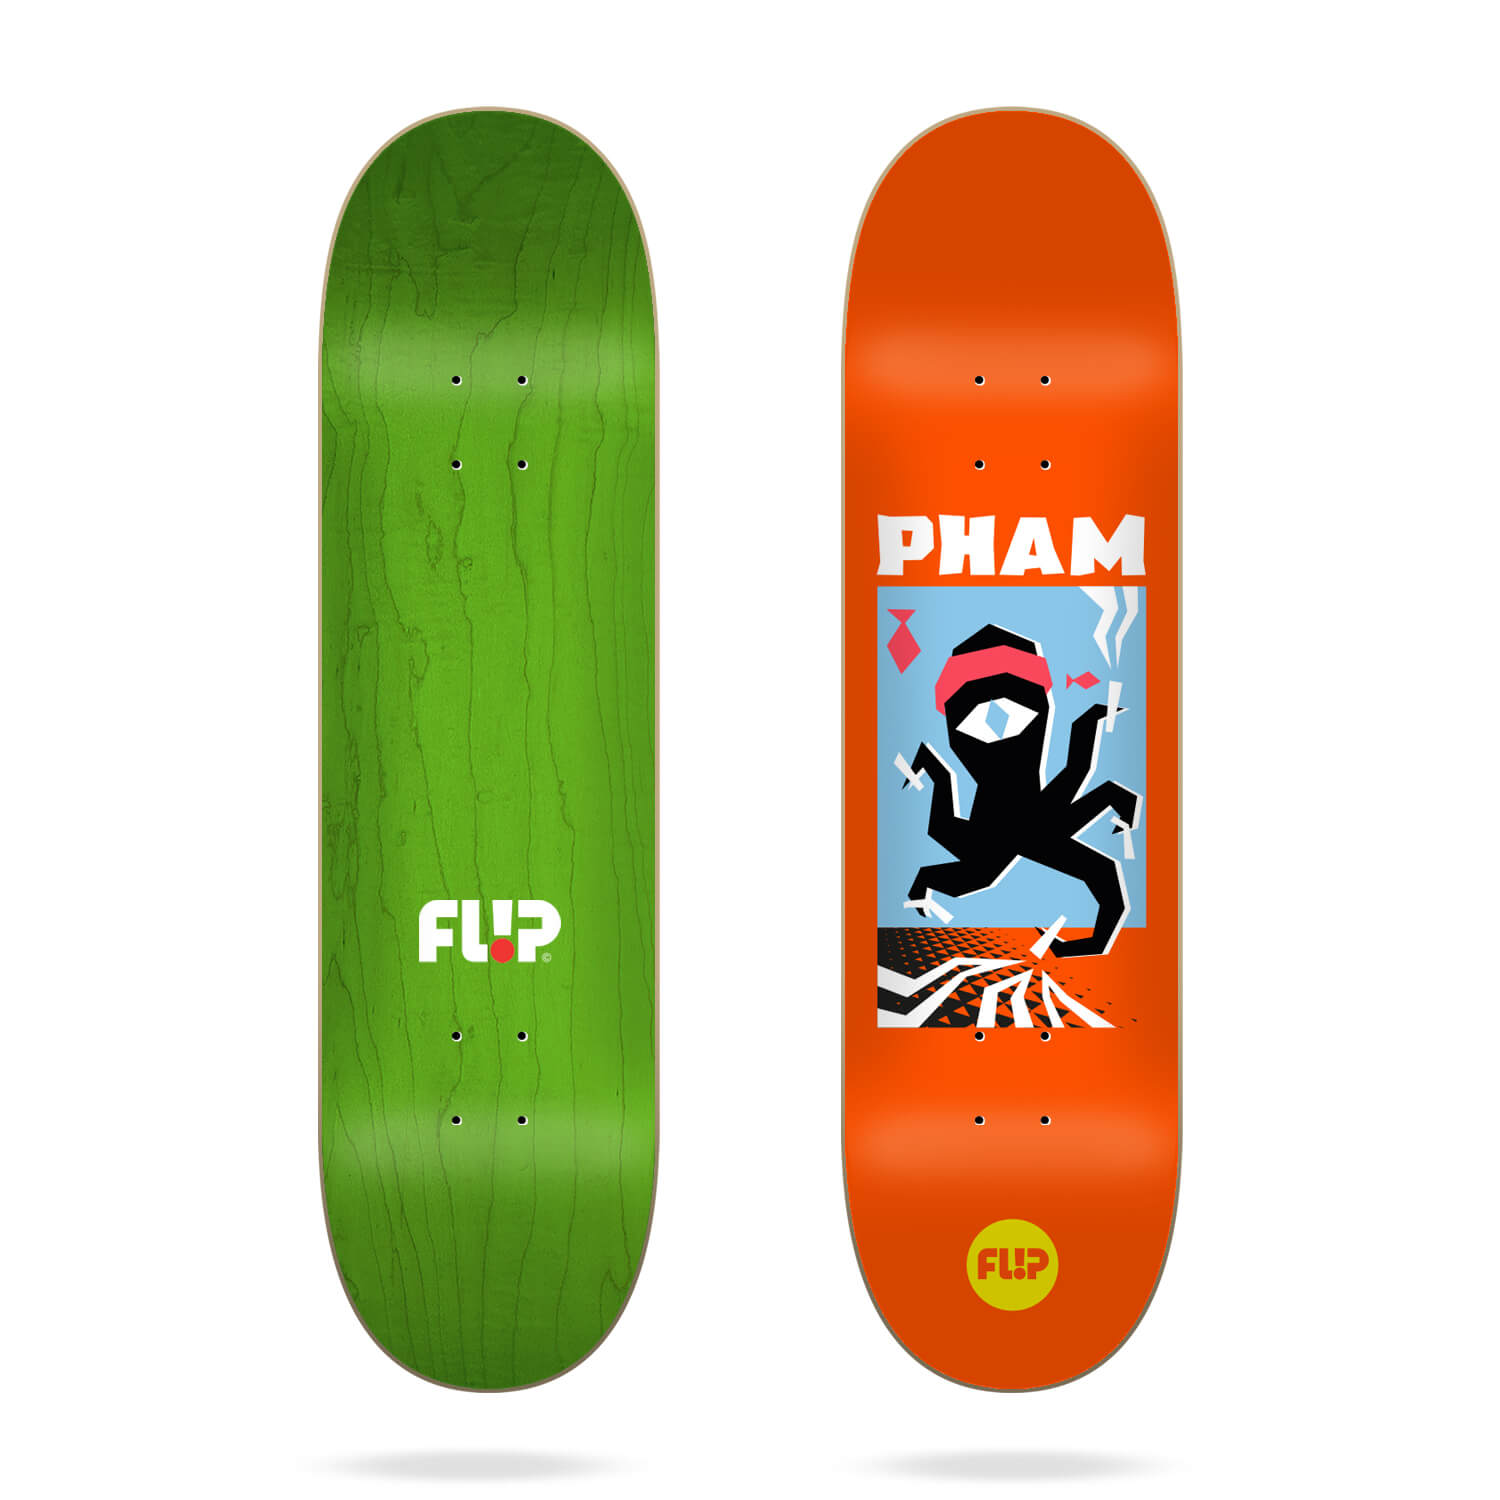 Flip Pham Grotto 8.25" deck